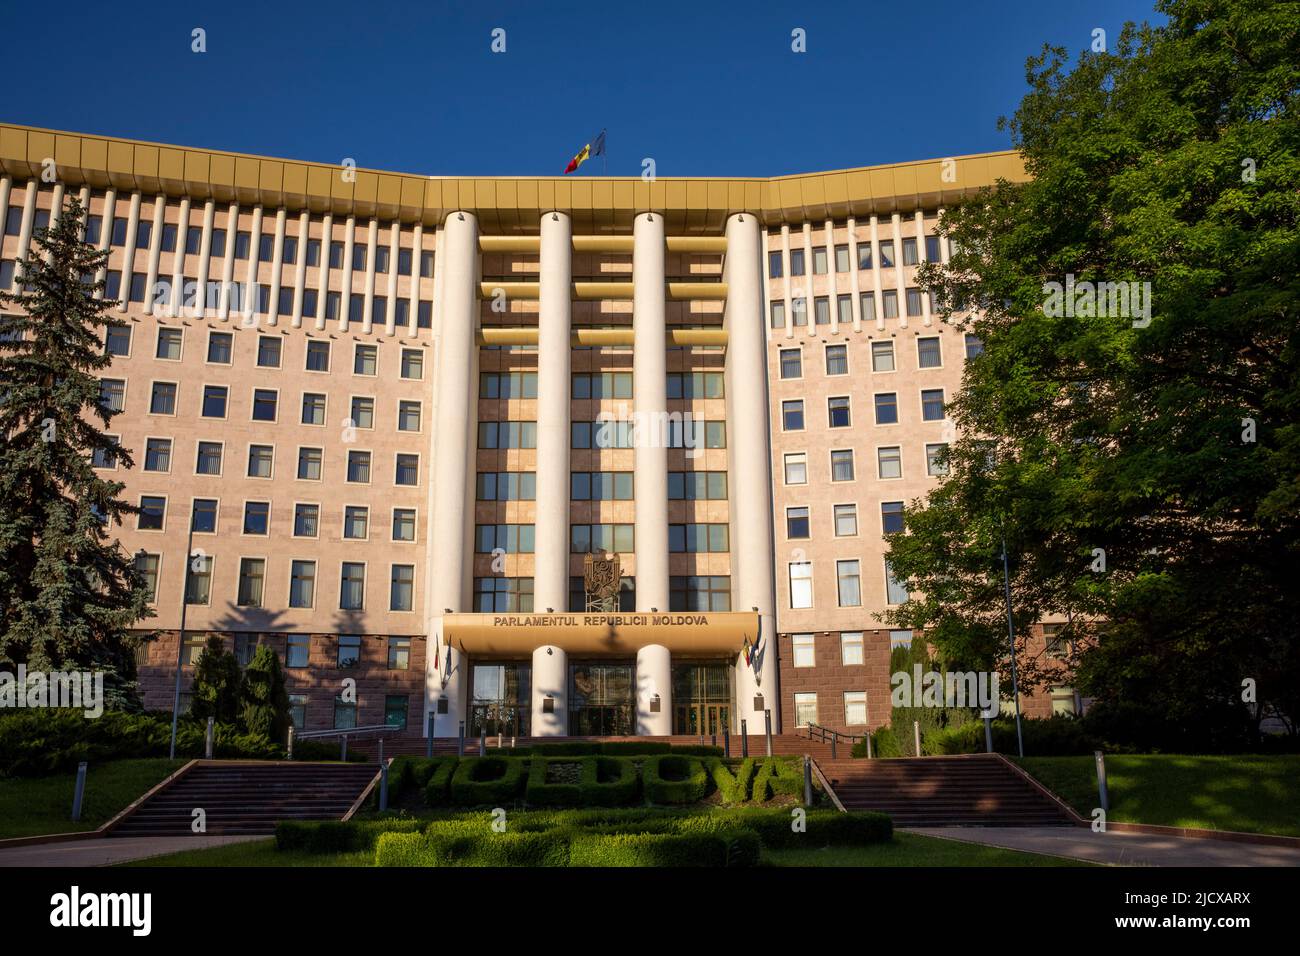 Parliament of the Republic of Moldova, Chisinau, Moldova, Europe Stock Photo